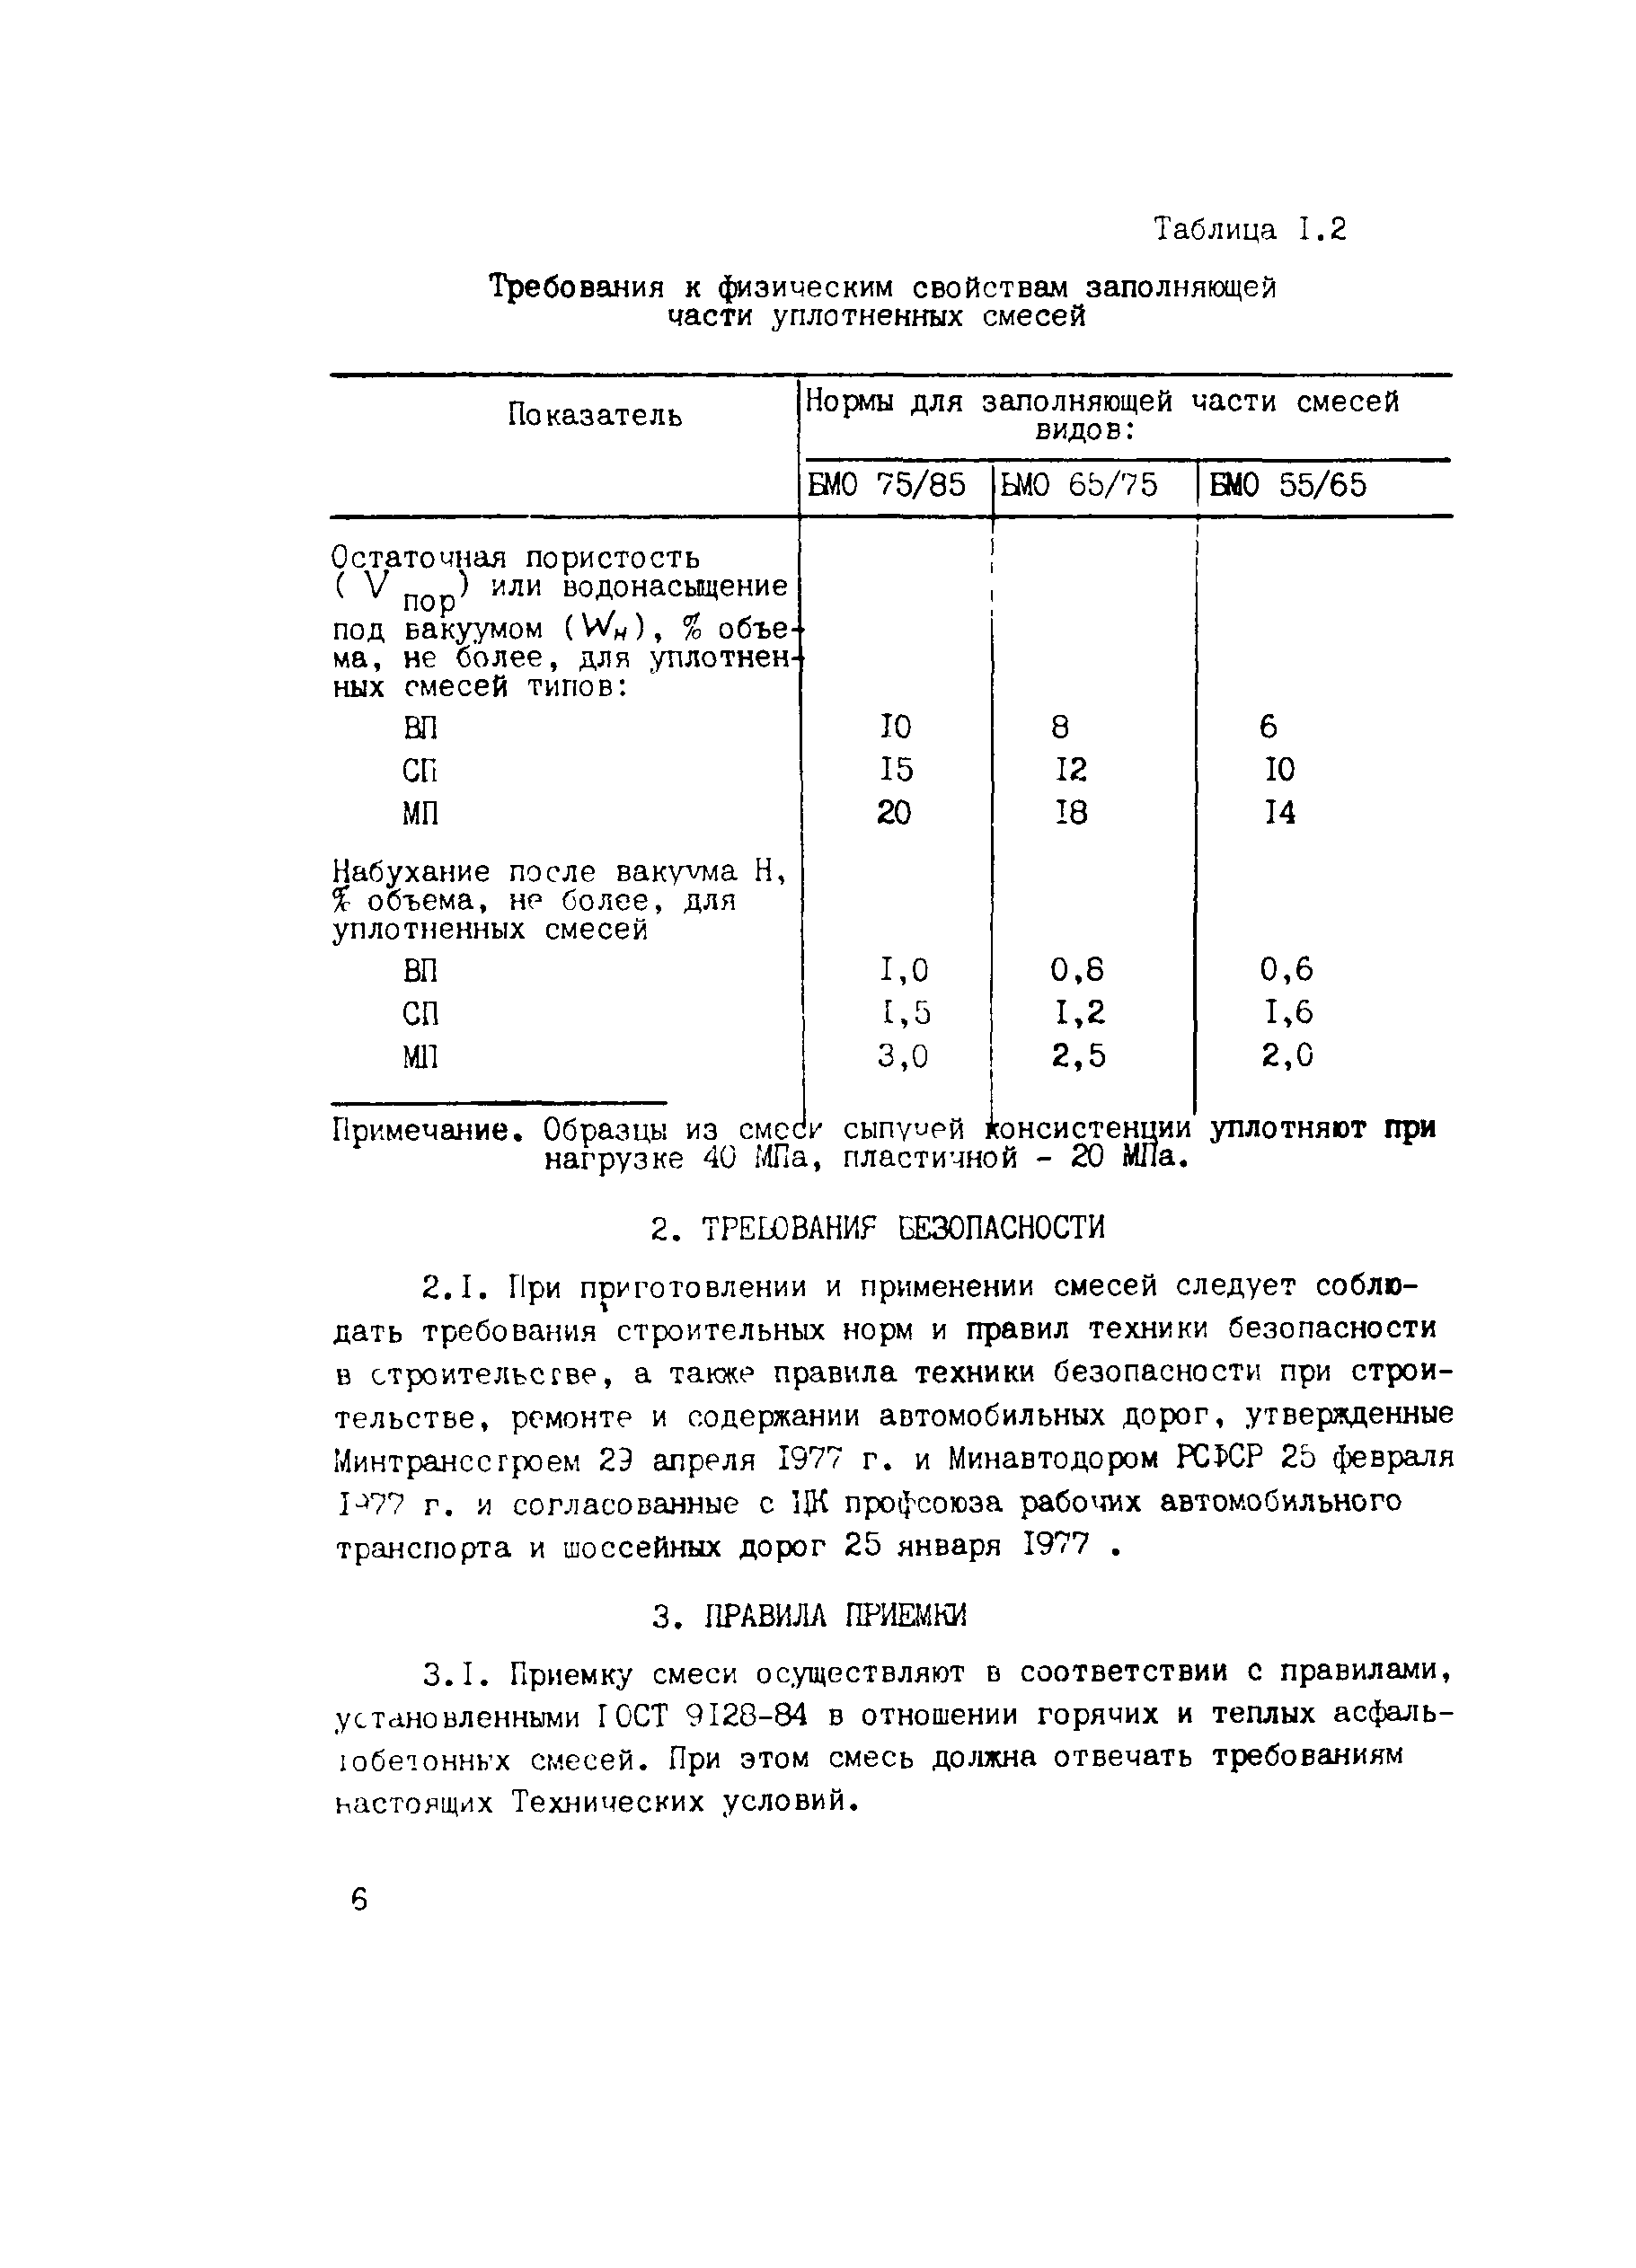 ТУ 218 РСФСР 601-88